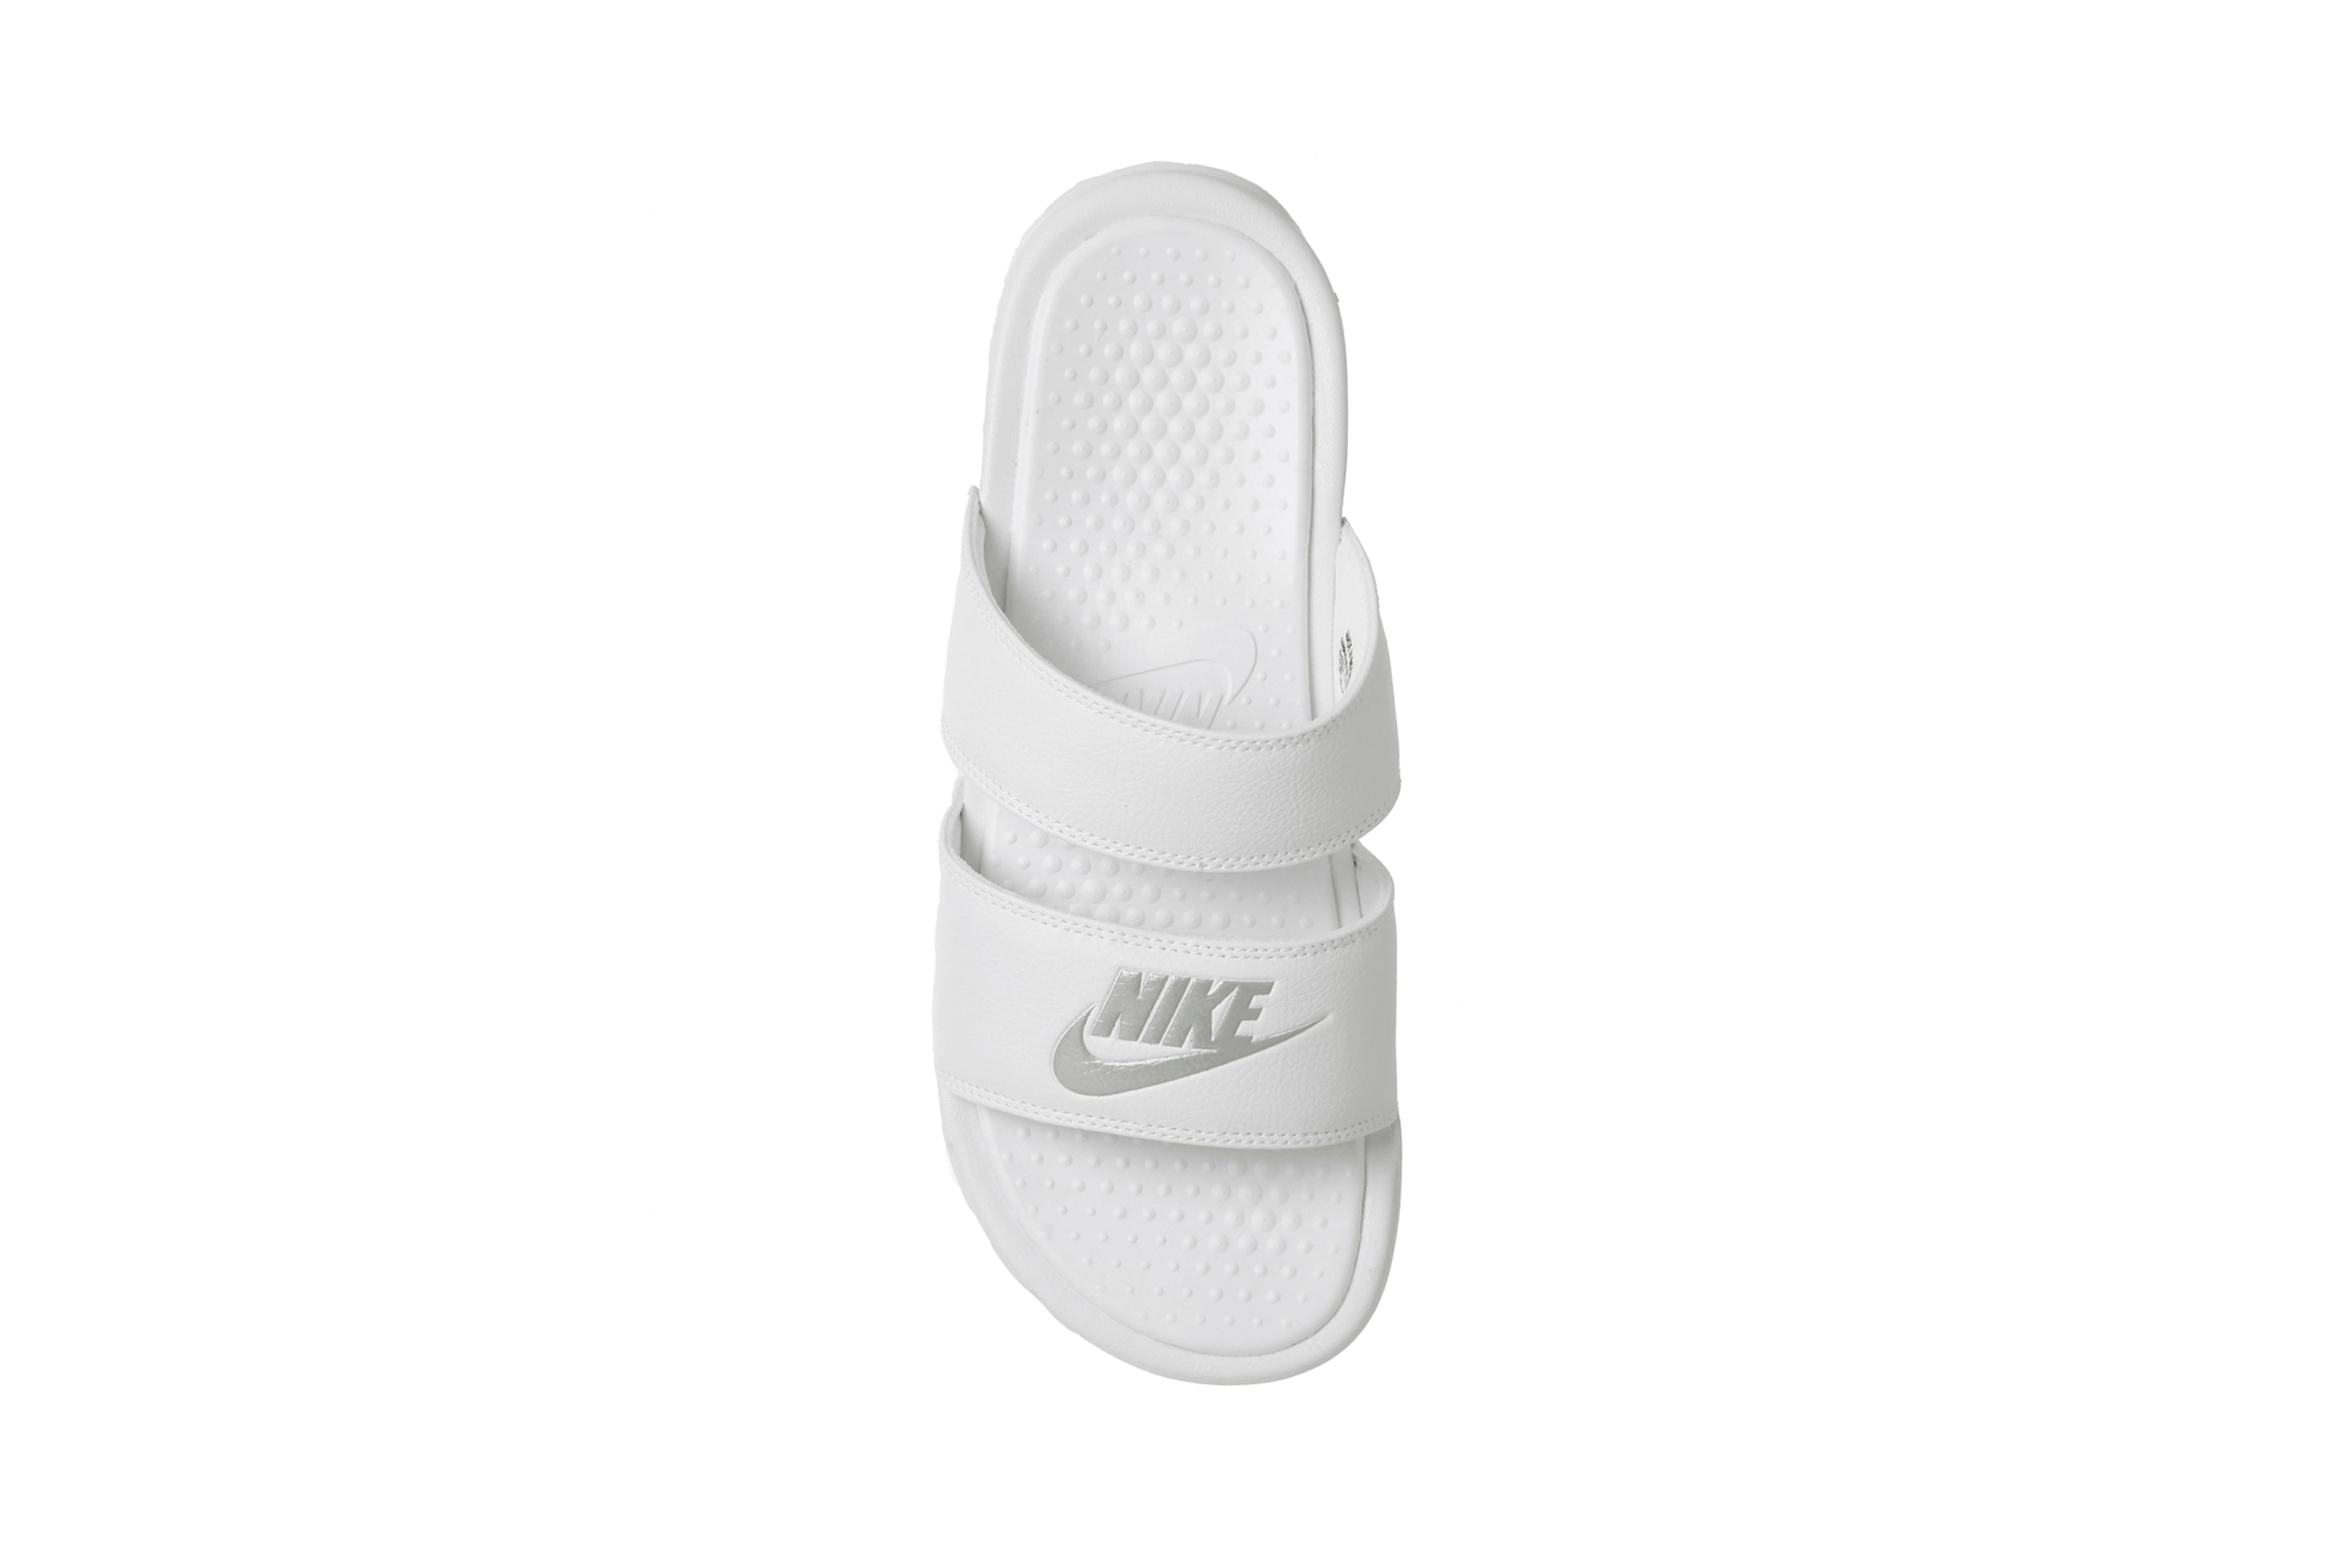 Nike Double Strap Slides in White/Black 